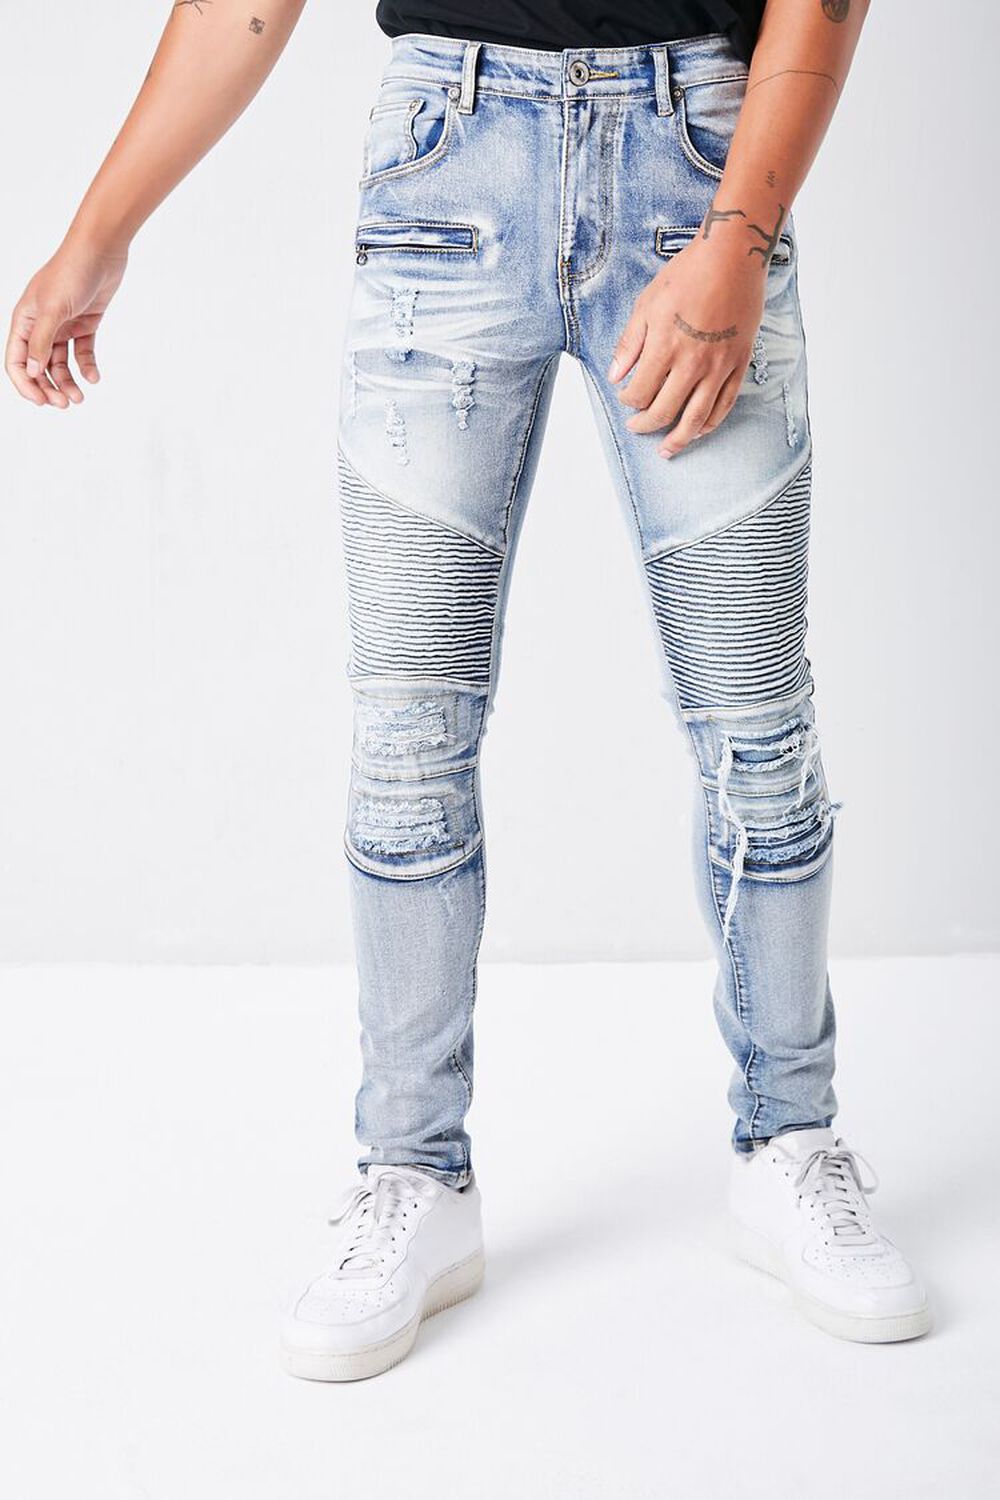 BLUE Distressed Slim-Fit Moto Jeans, image 2